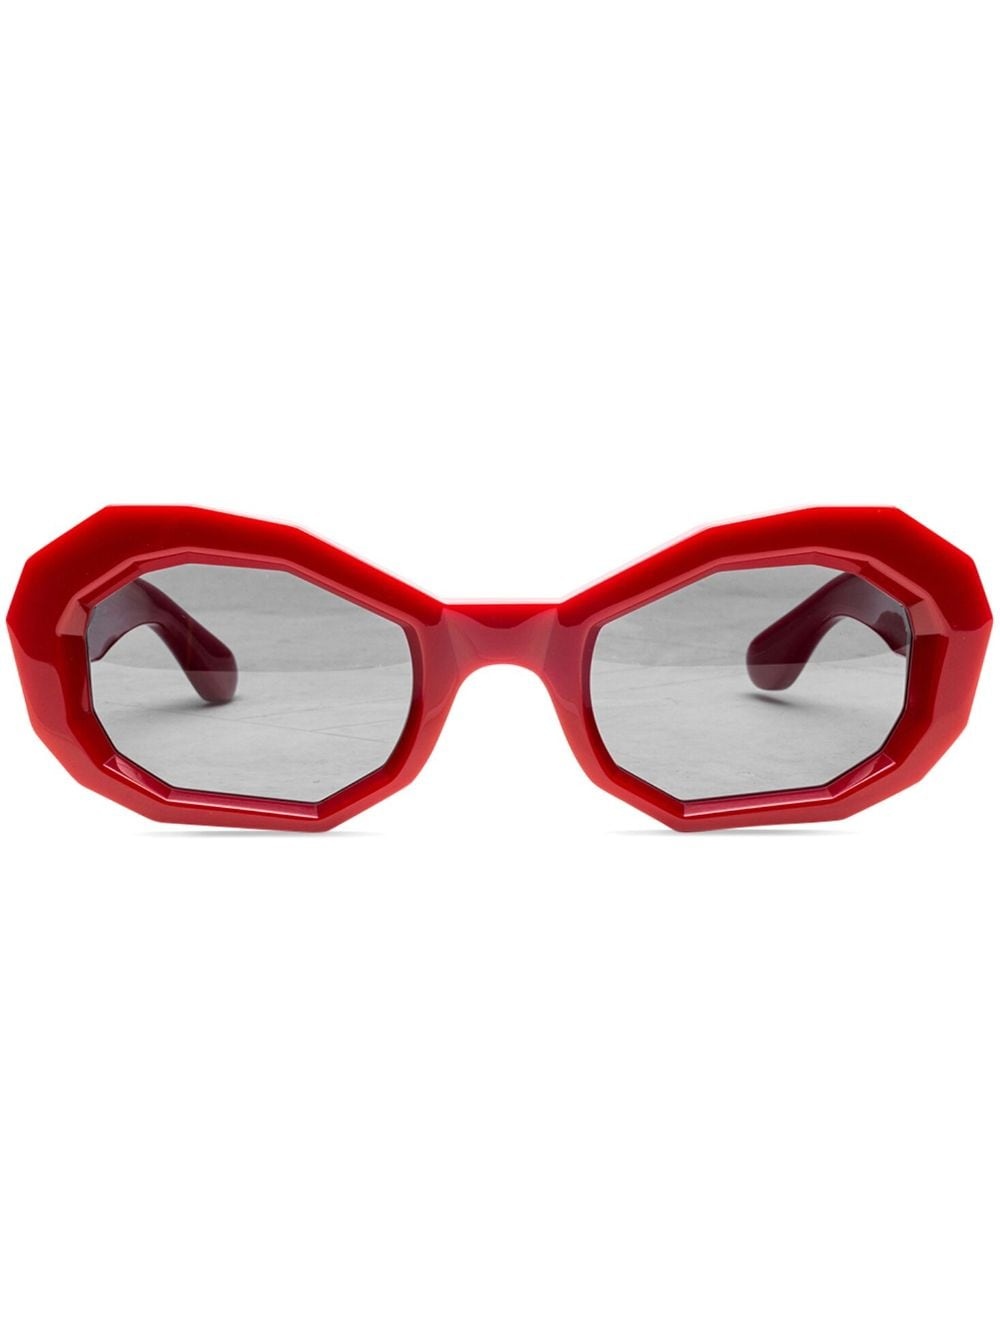 Honeycomb "Red" sunglasses - 1